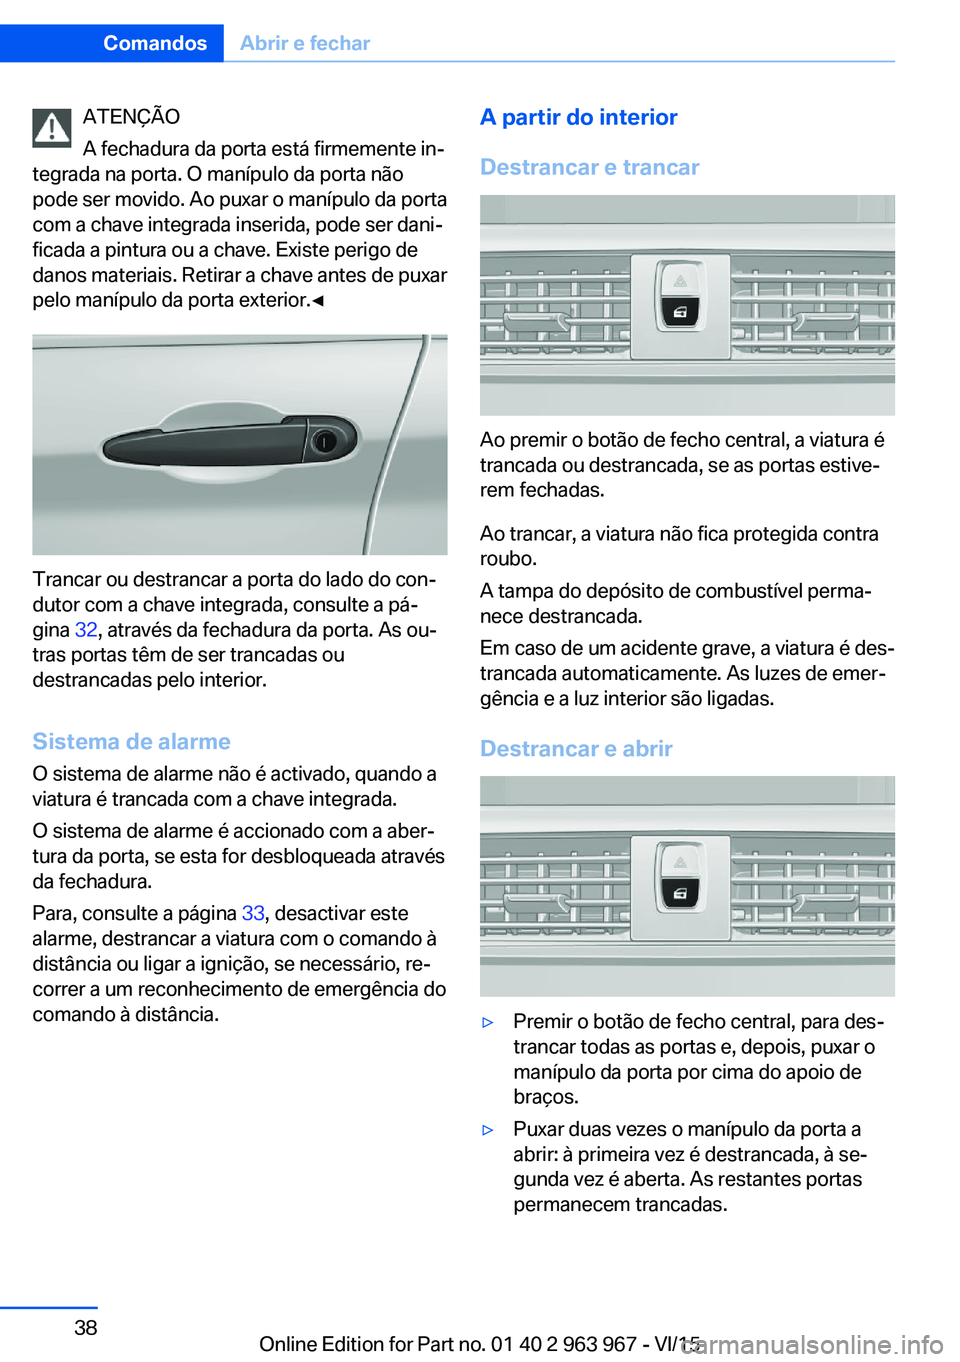 BMW 4 SERIES COUPE 2016  Manual do condutor (in Portuguese) ATENÇÃO
A fechadura da porta está firmemente in‐
tegrada na porta. O manípulo da porta não
pode ser movido. Ao puxar o manípulo da porta
com a chave integrada inserida, pode ser dani‐
ficada